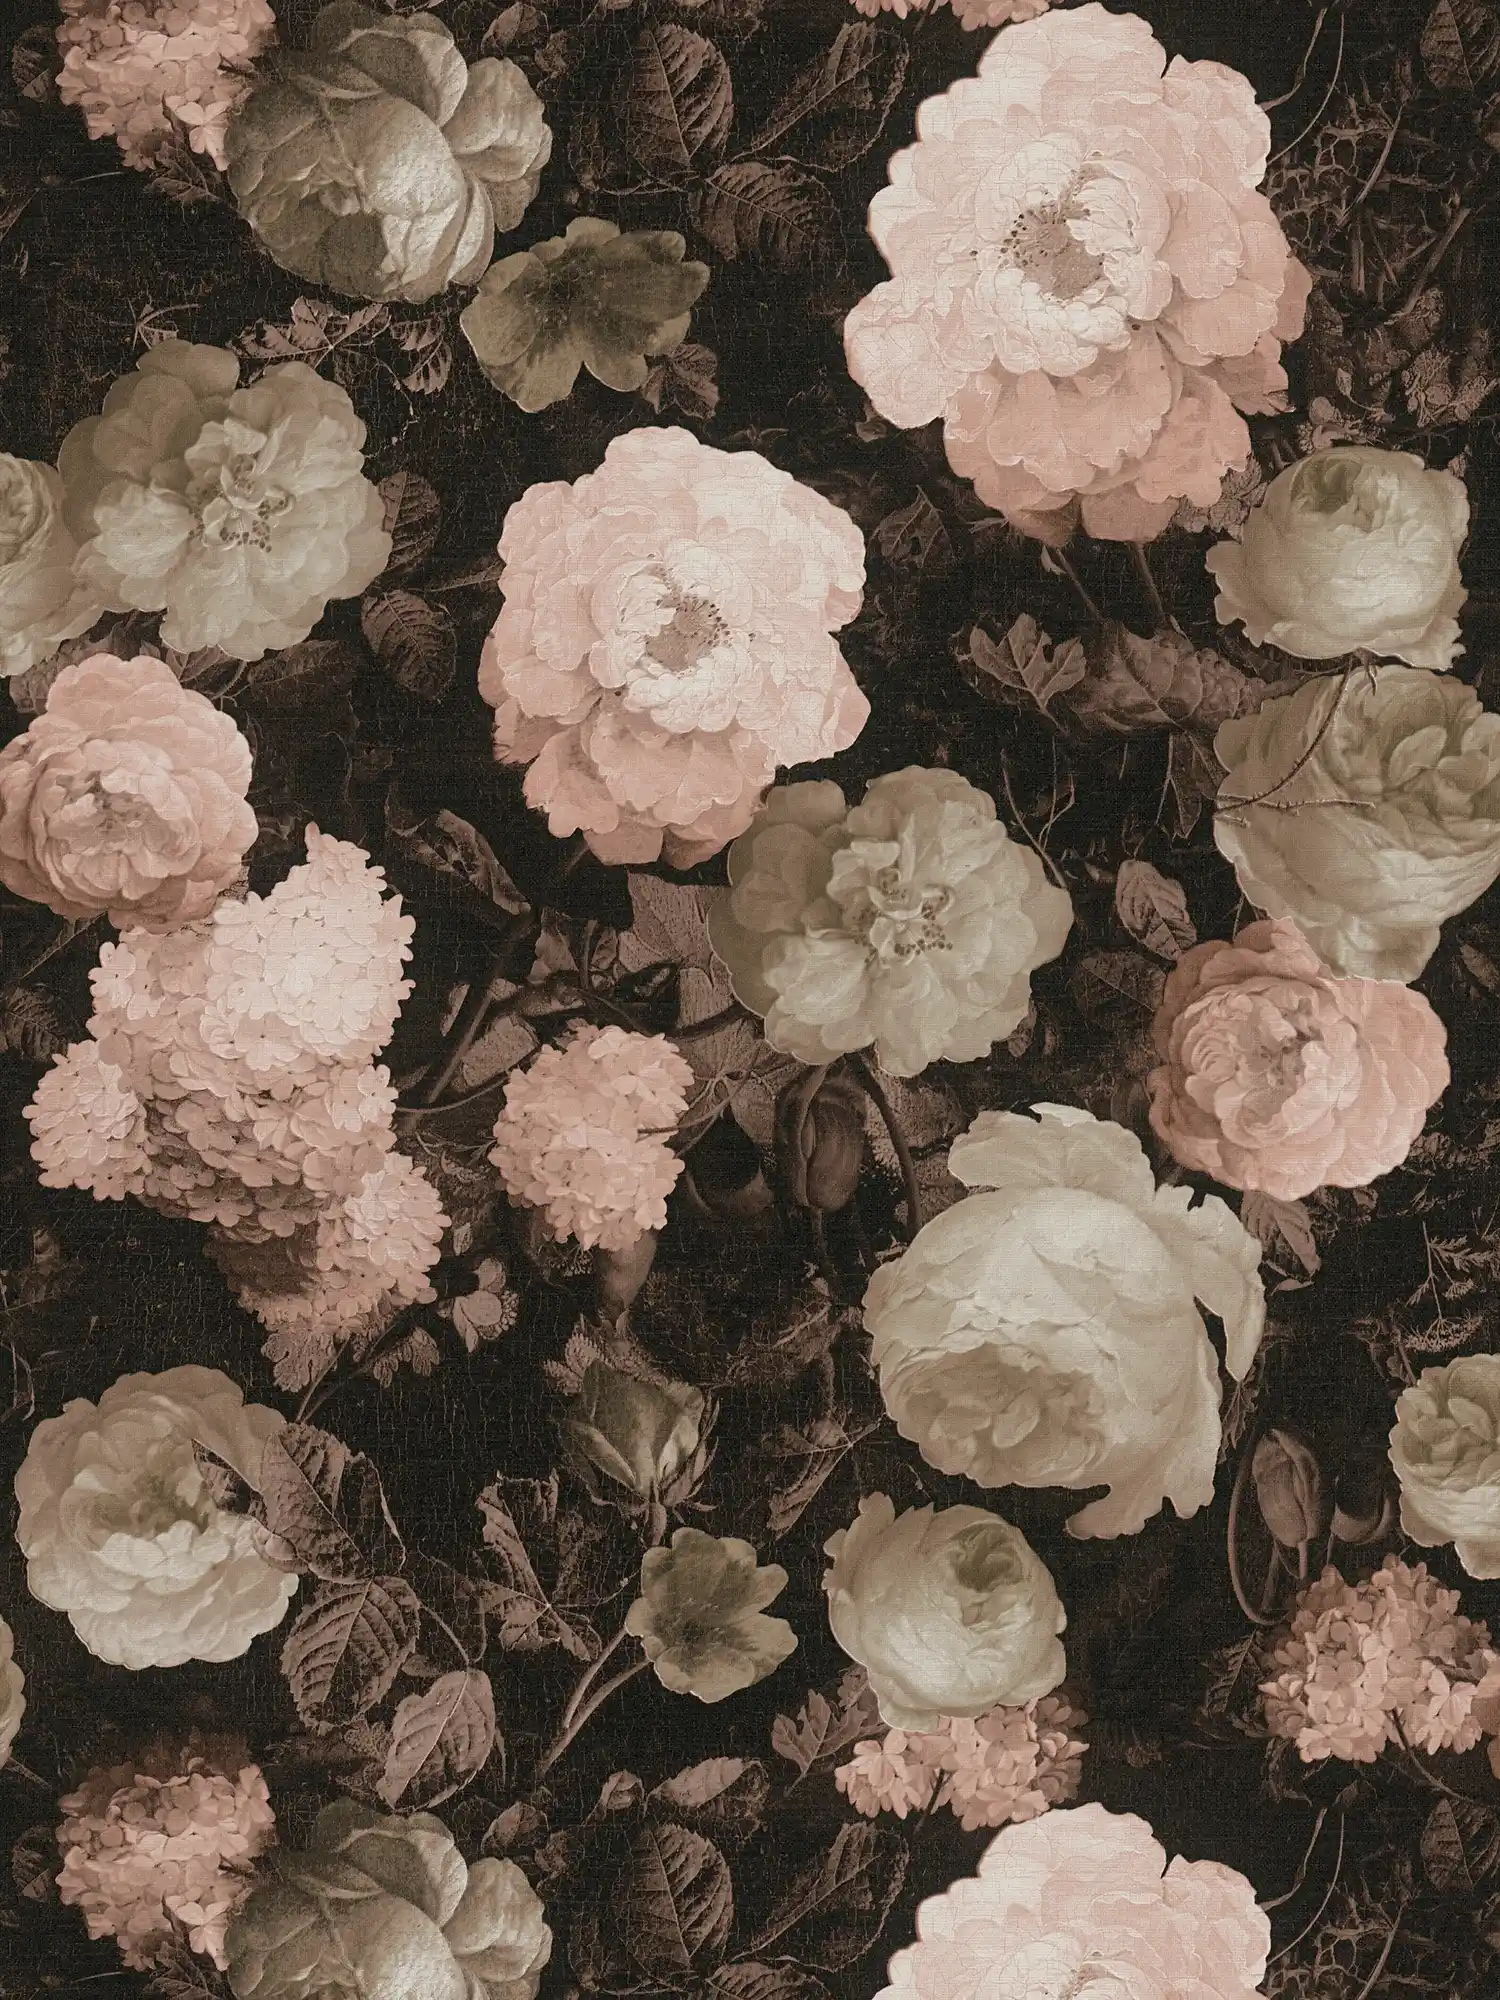             Motif wallpaper rose blossoms, shrub roses - pink, red, grey
        